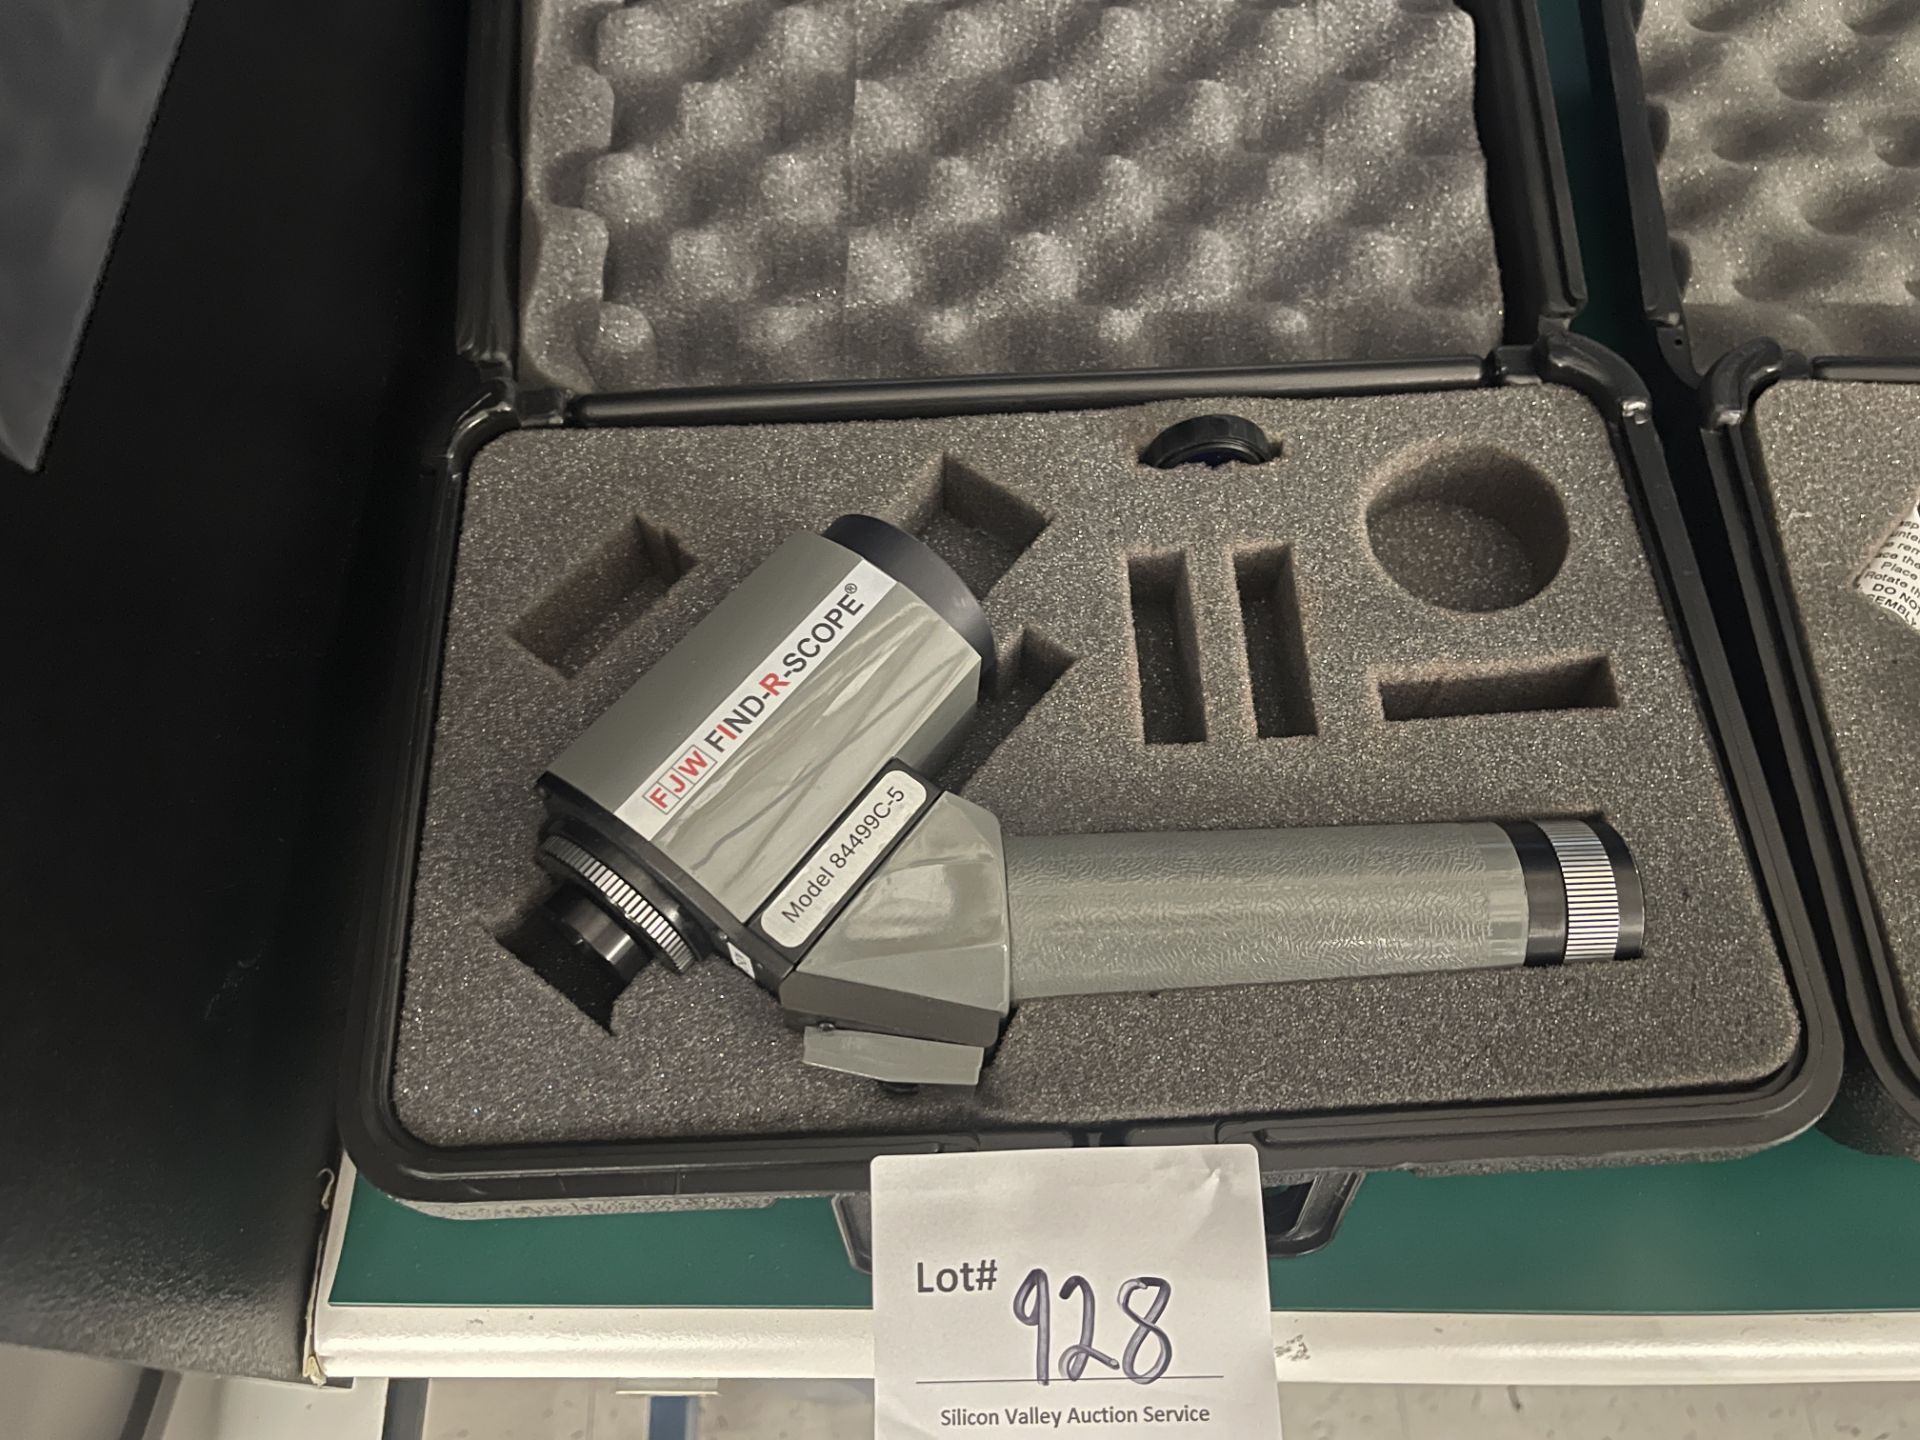 FJW Find-R-Scope Model 84499C-5 in plastic case